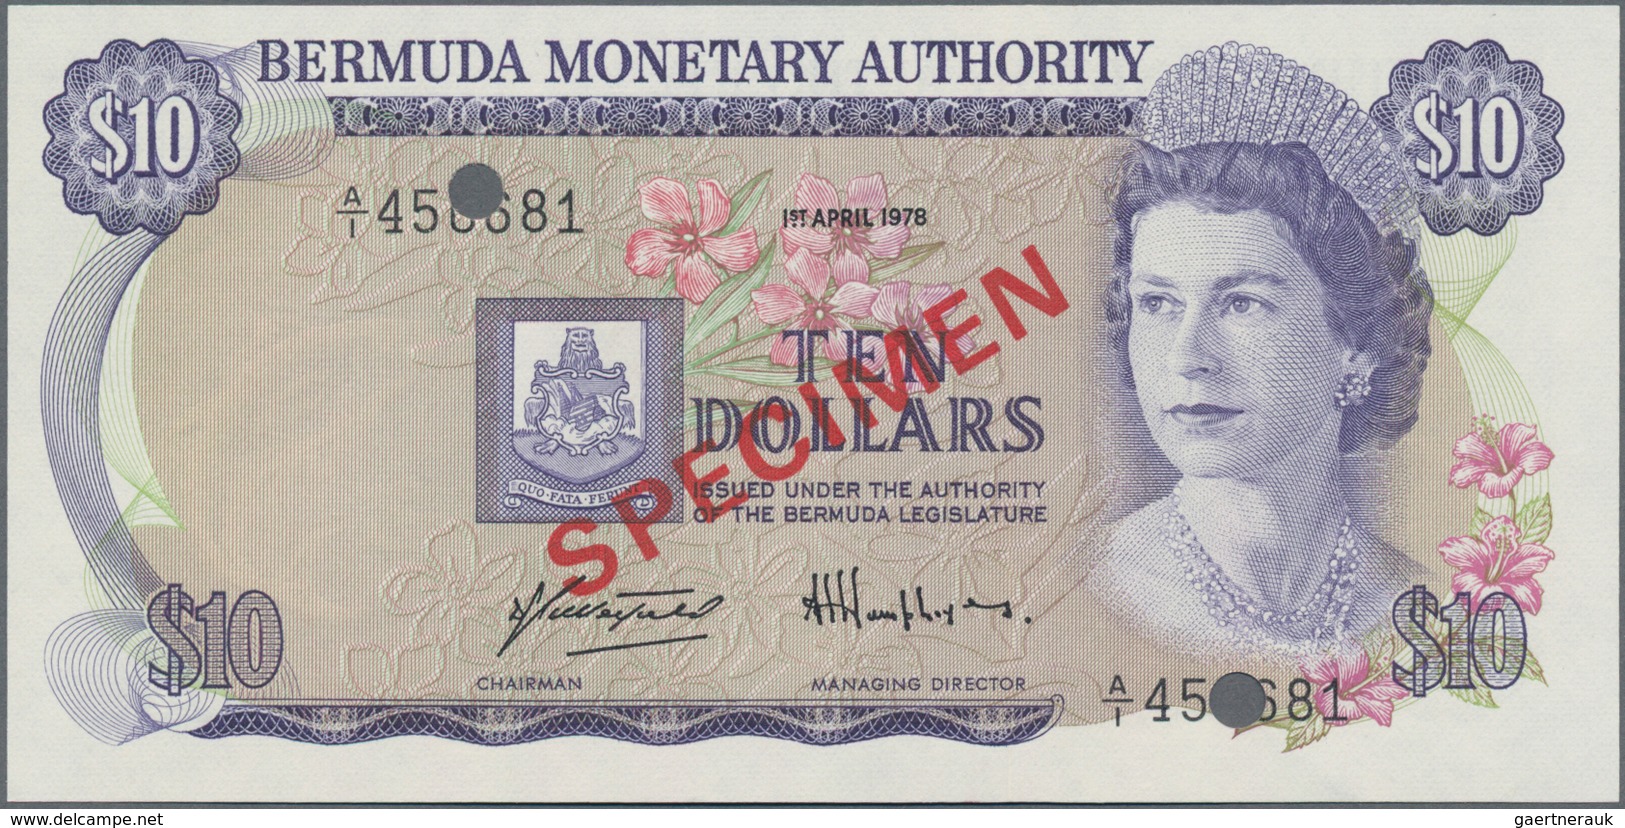 Bermuda: Nice Specimen set of the Bermuda Monetary Authority with 1, 5, 10, 20, 50 and 100 Dollars S